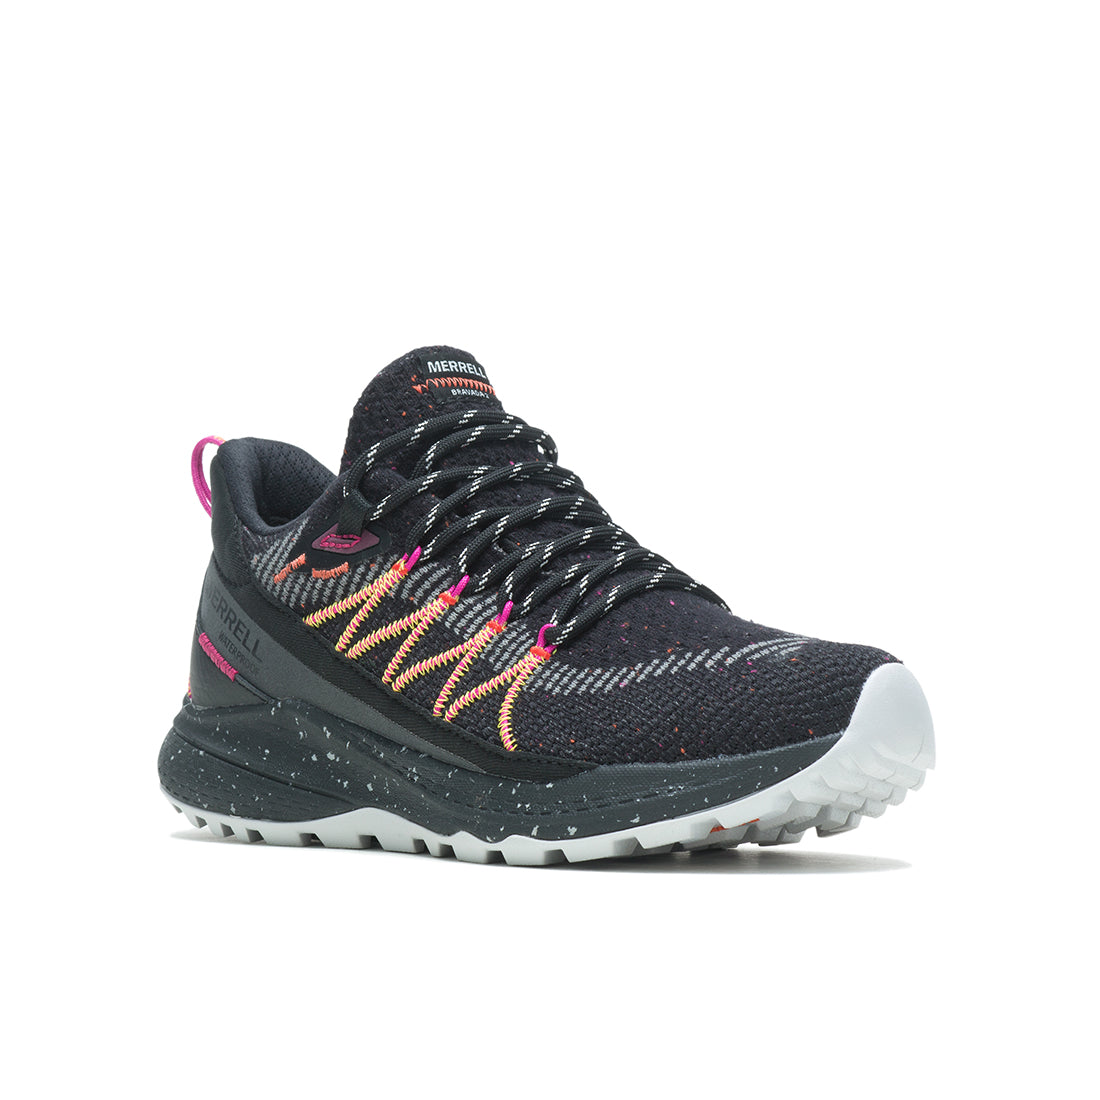 Bravada 2 Waterproof – Black/Fuschia Womens Hiking Shoes - 0